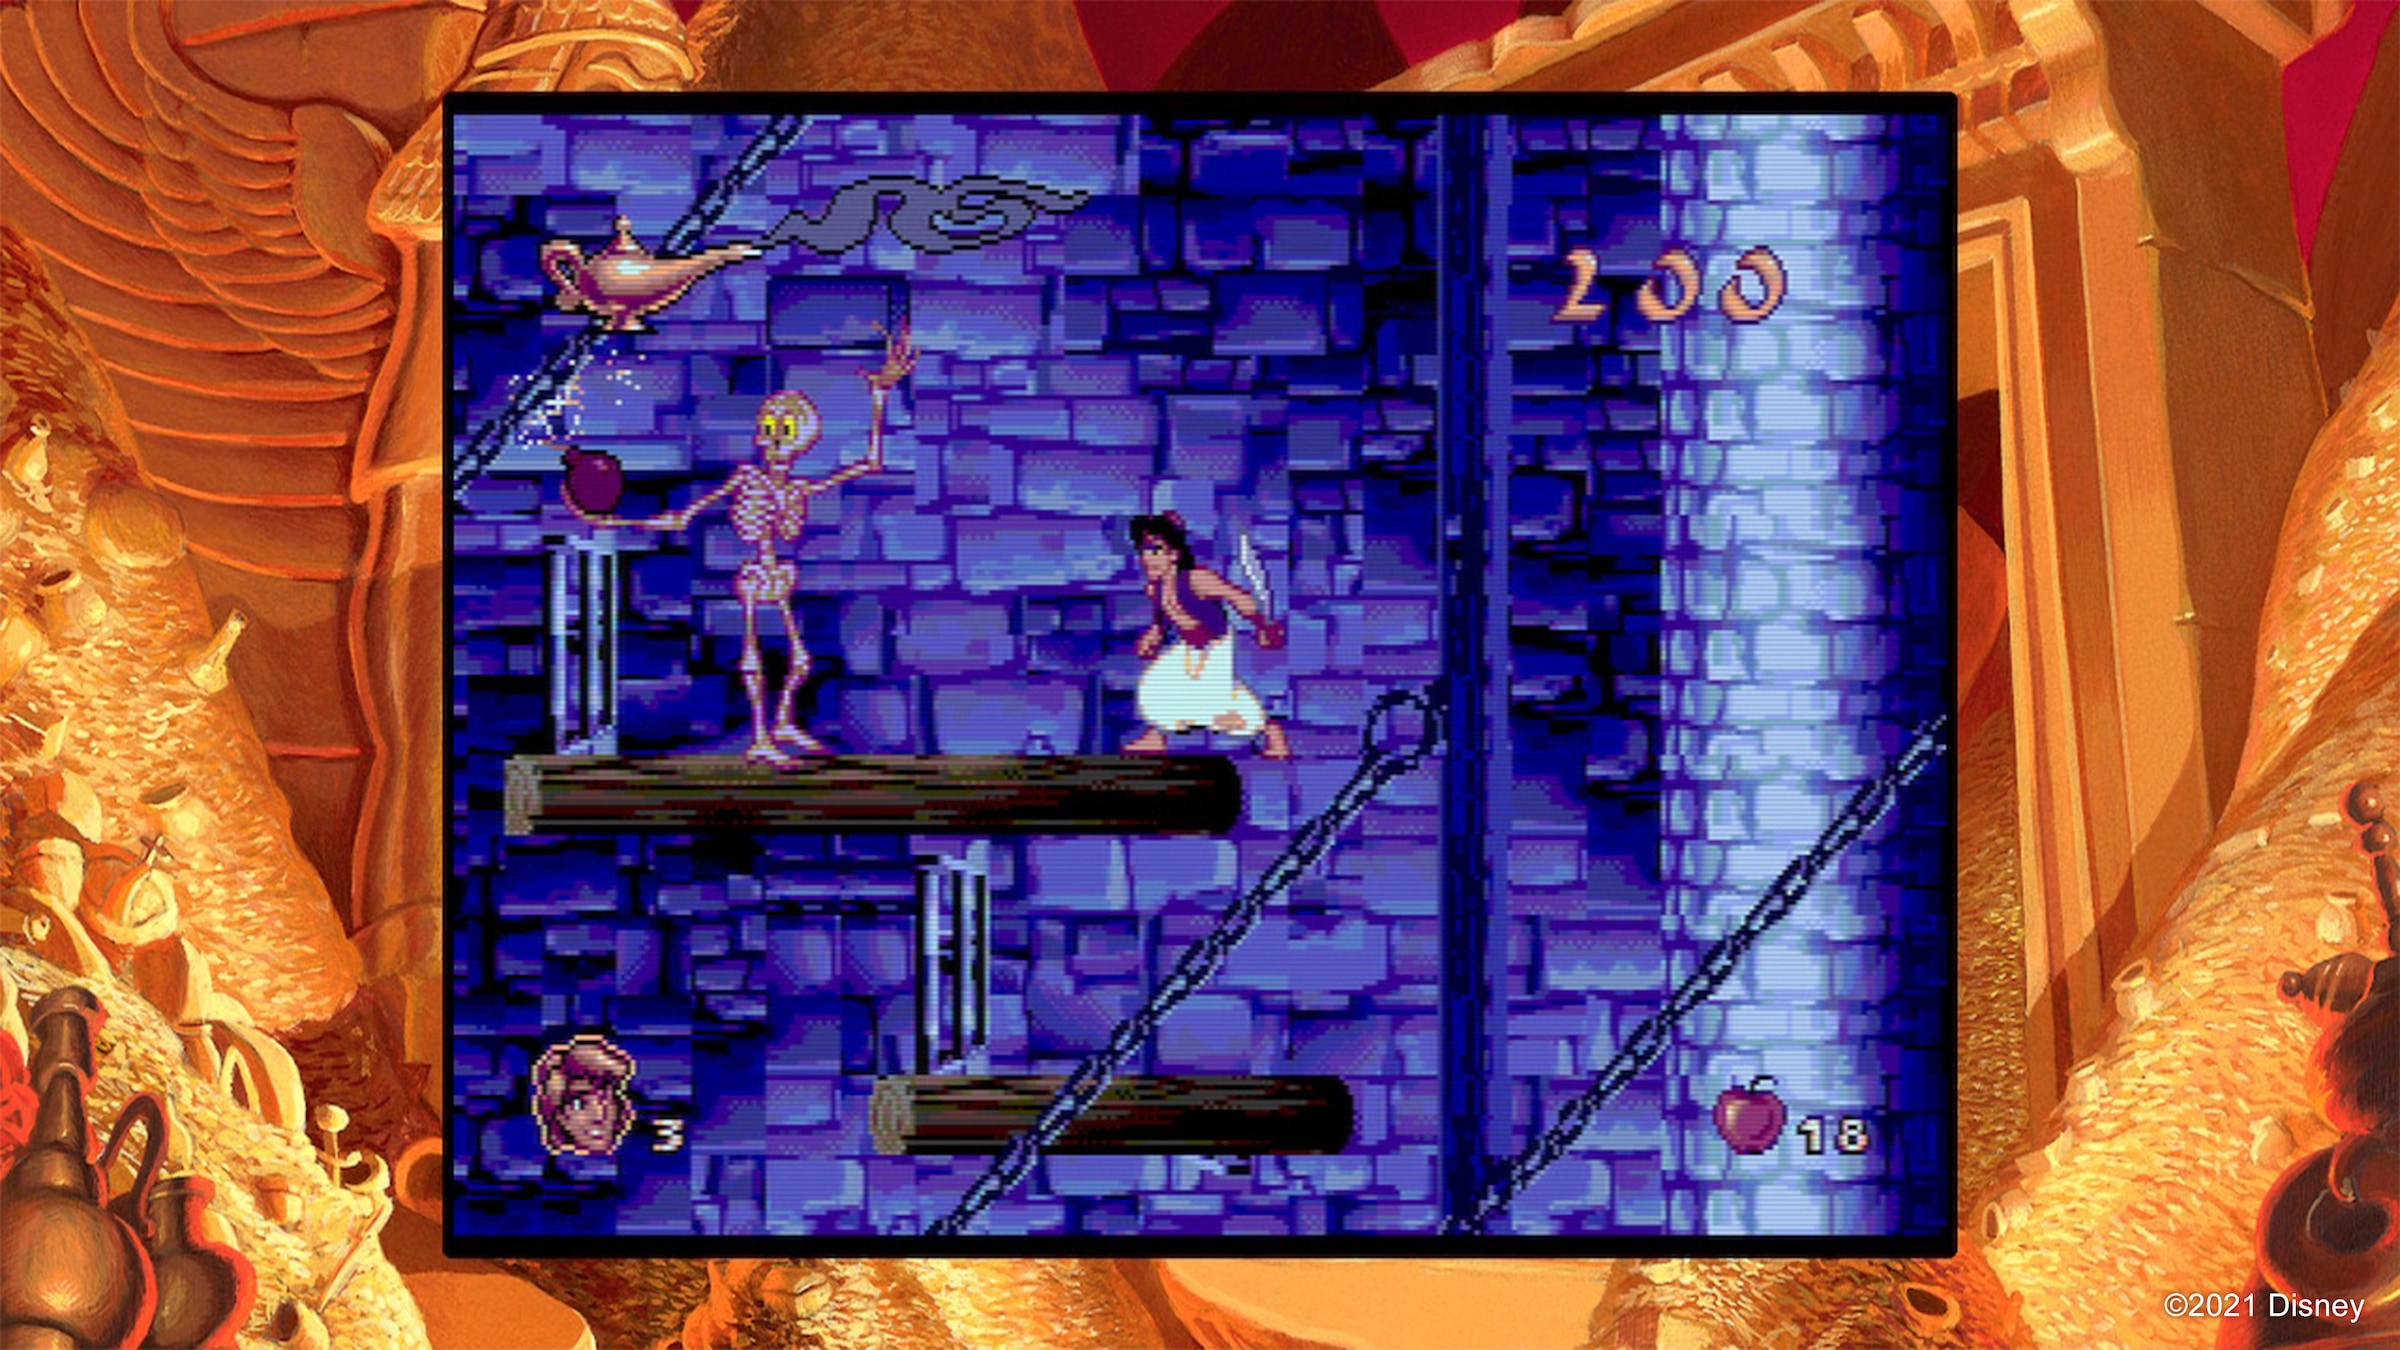 Disney Spielesoftware »Disney Classic Games - Jungle Book, Aladdin, Lion King«, Nintendo Switch